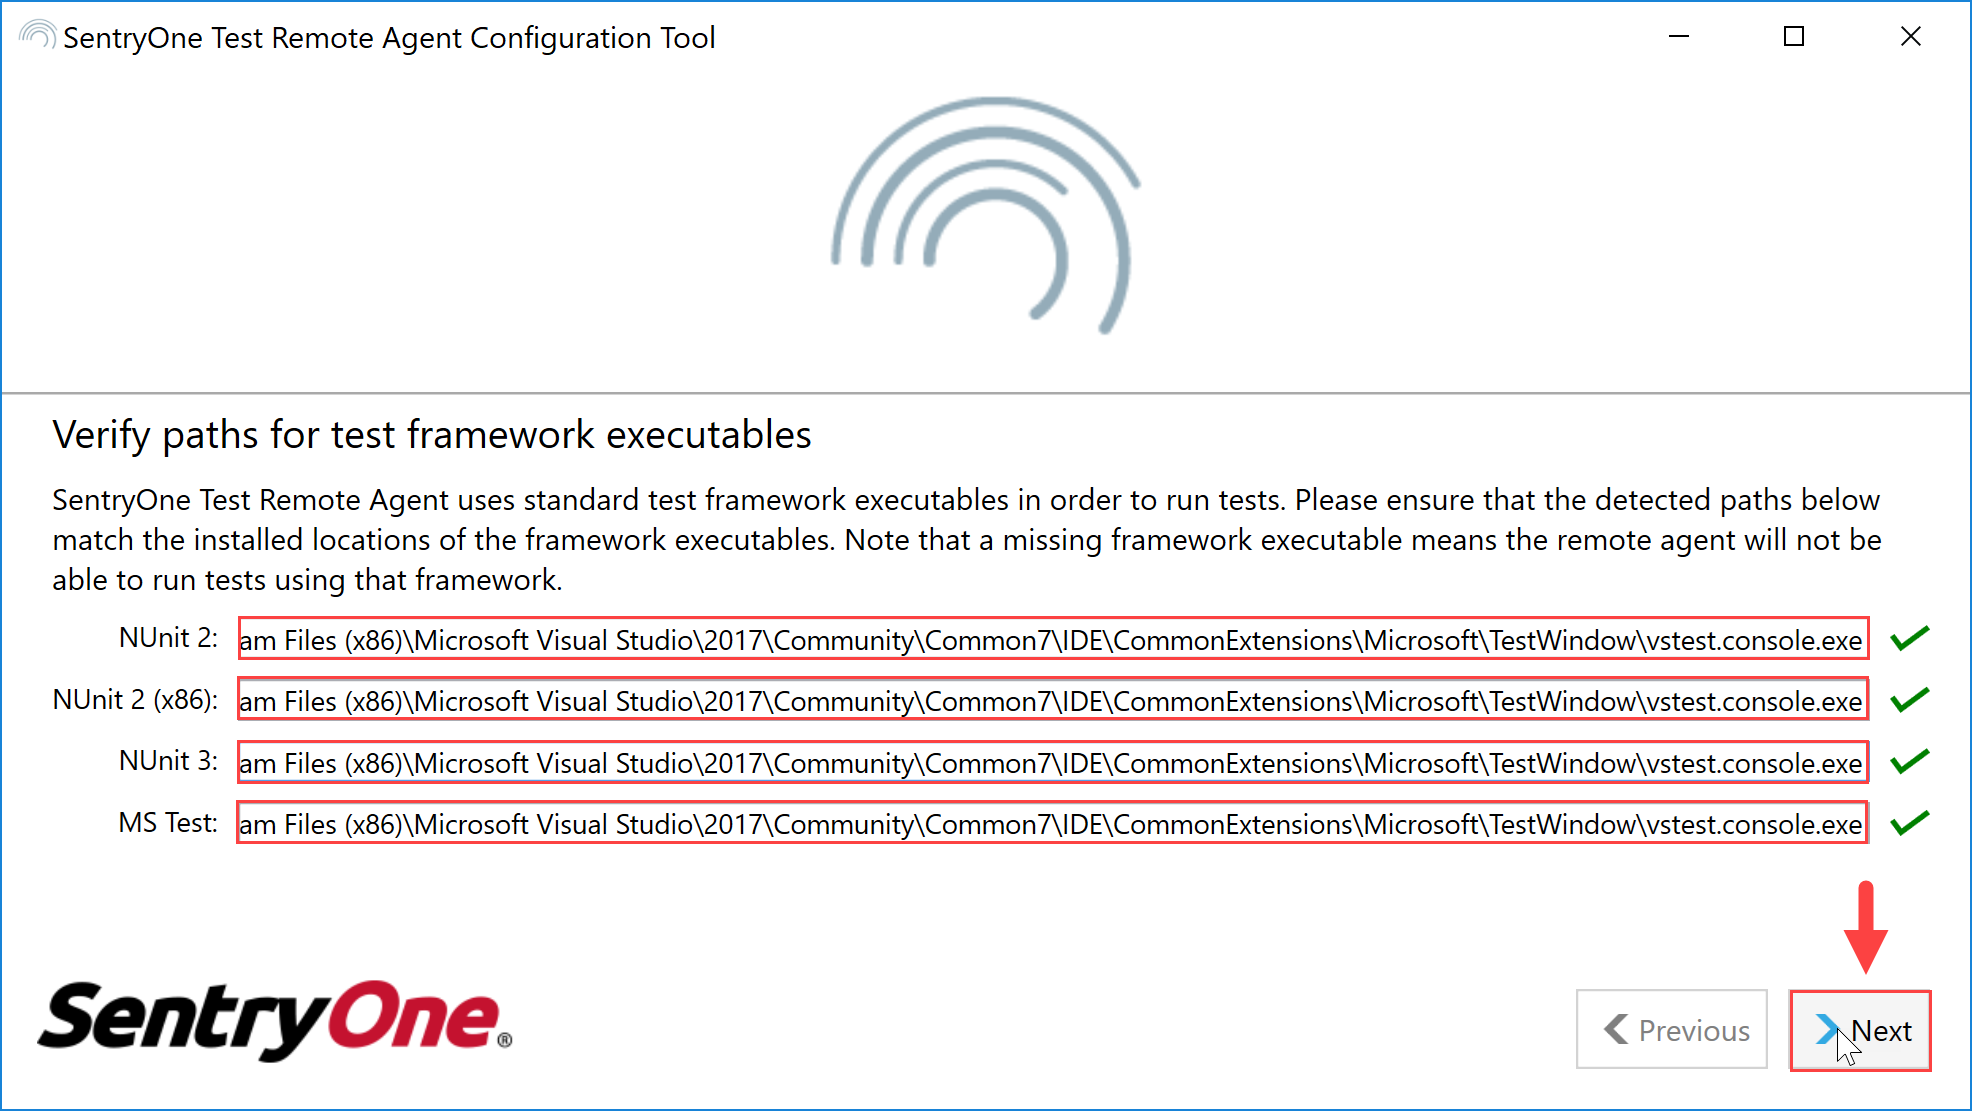 SentryOne Test Remote Agent Configuration Tool Verify paths for test framework executables